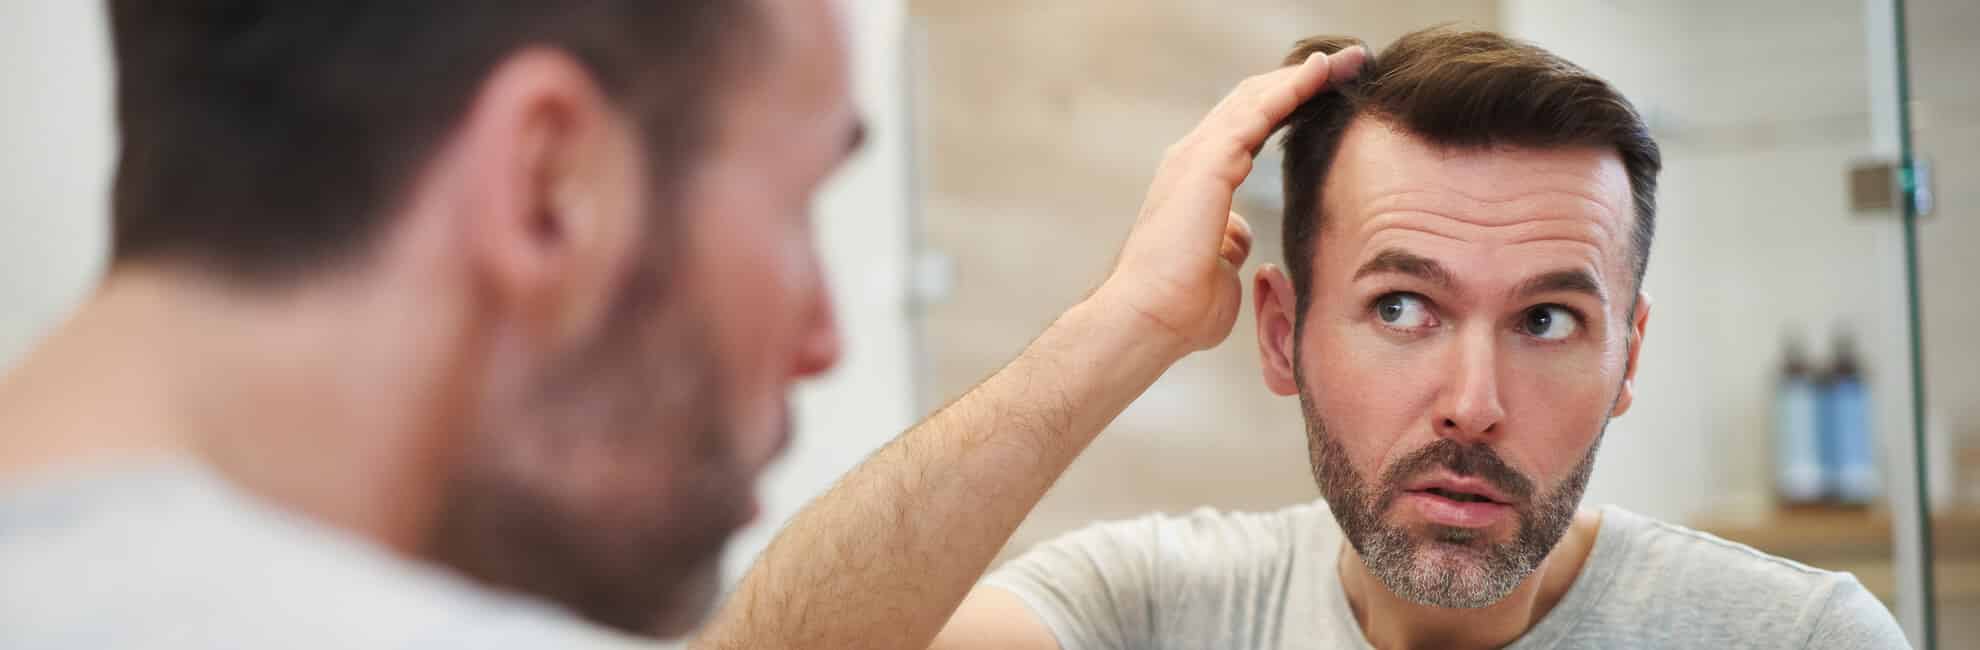 Hair Loss Treatment for Men: Causes & Prevention | Rossano Ferretti